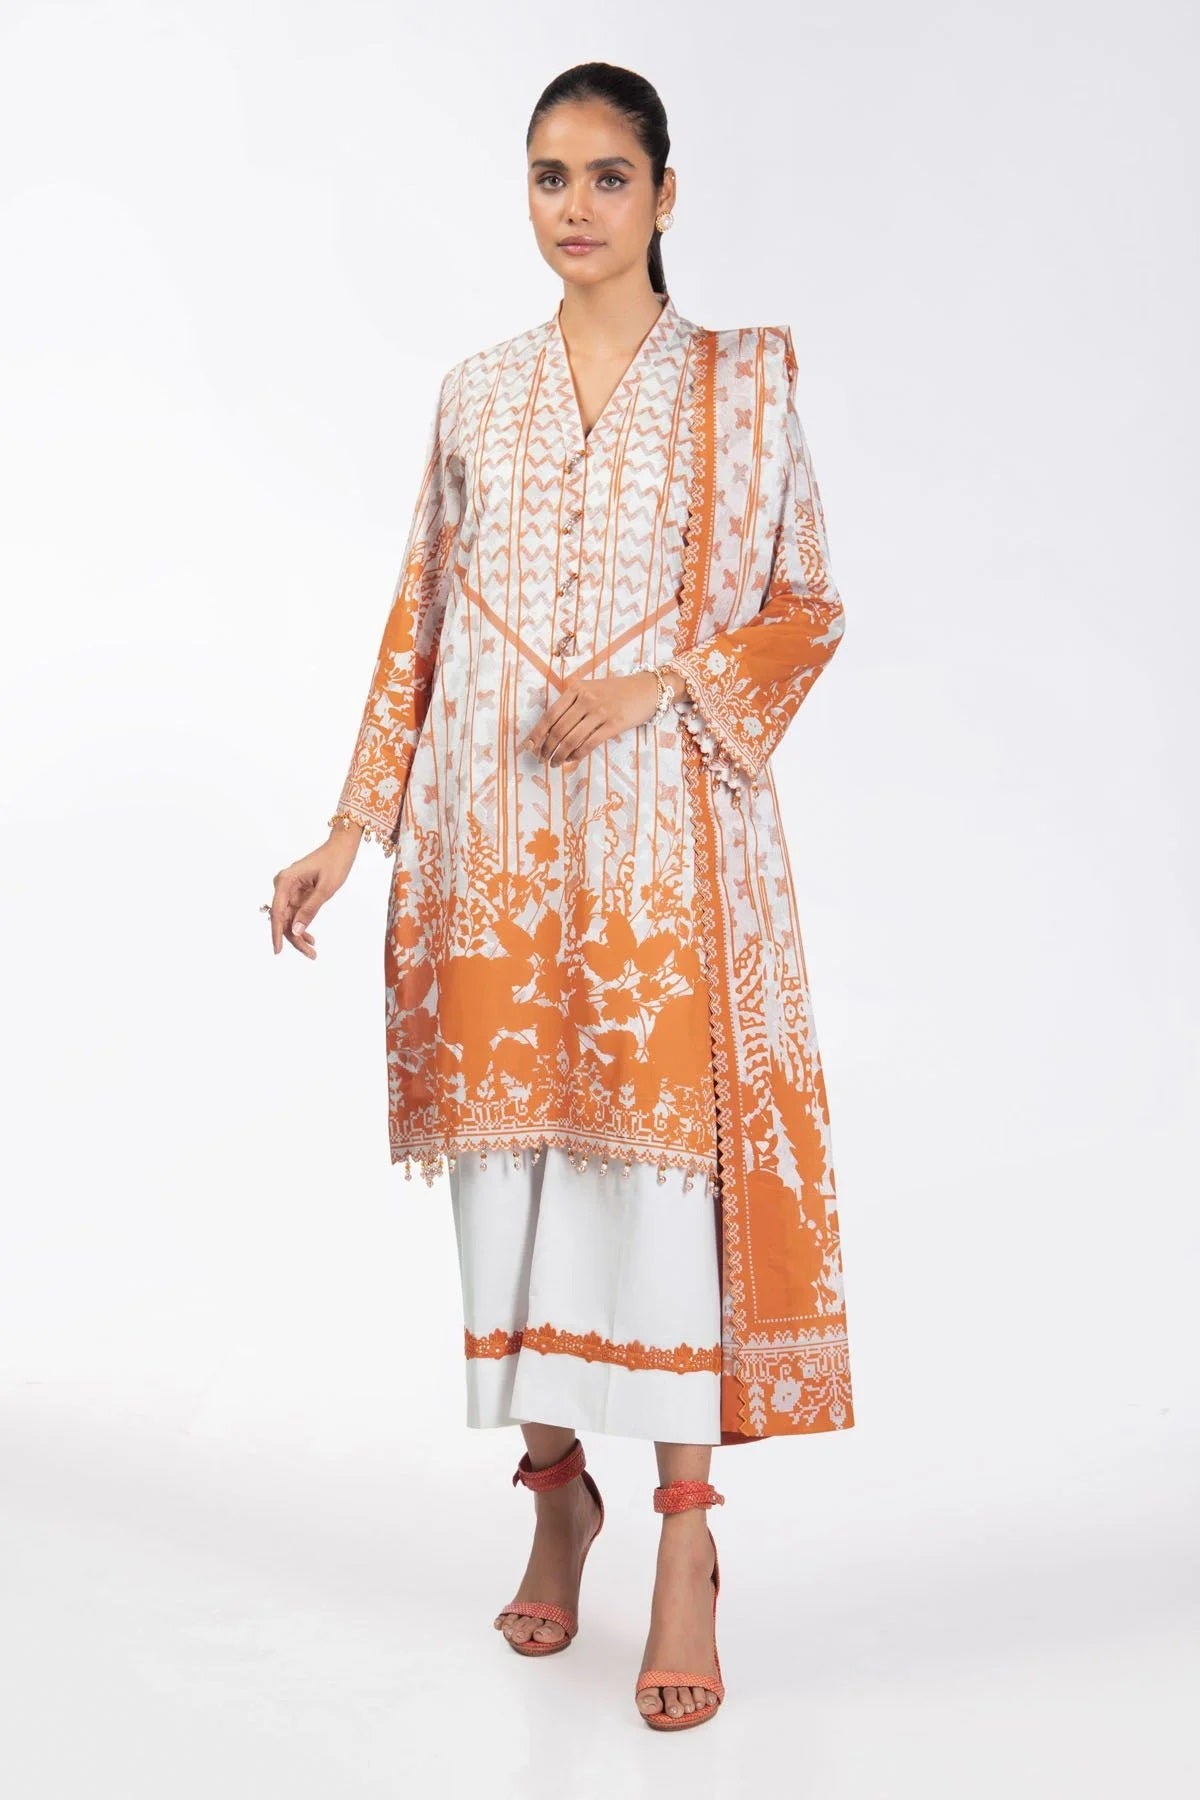 Al Karam Printed Lawn Suits Unstitched 3 Piece SS-08-22-2-Orange - Summer Collection